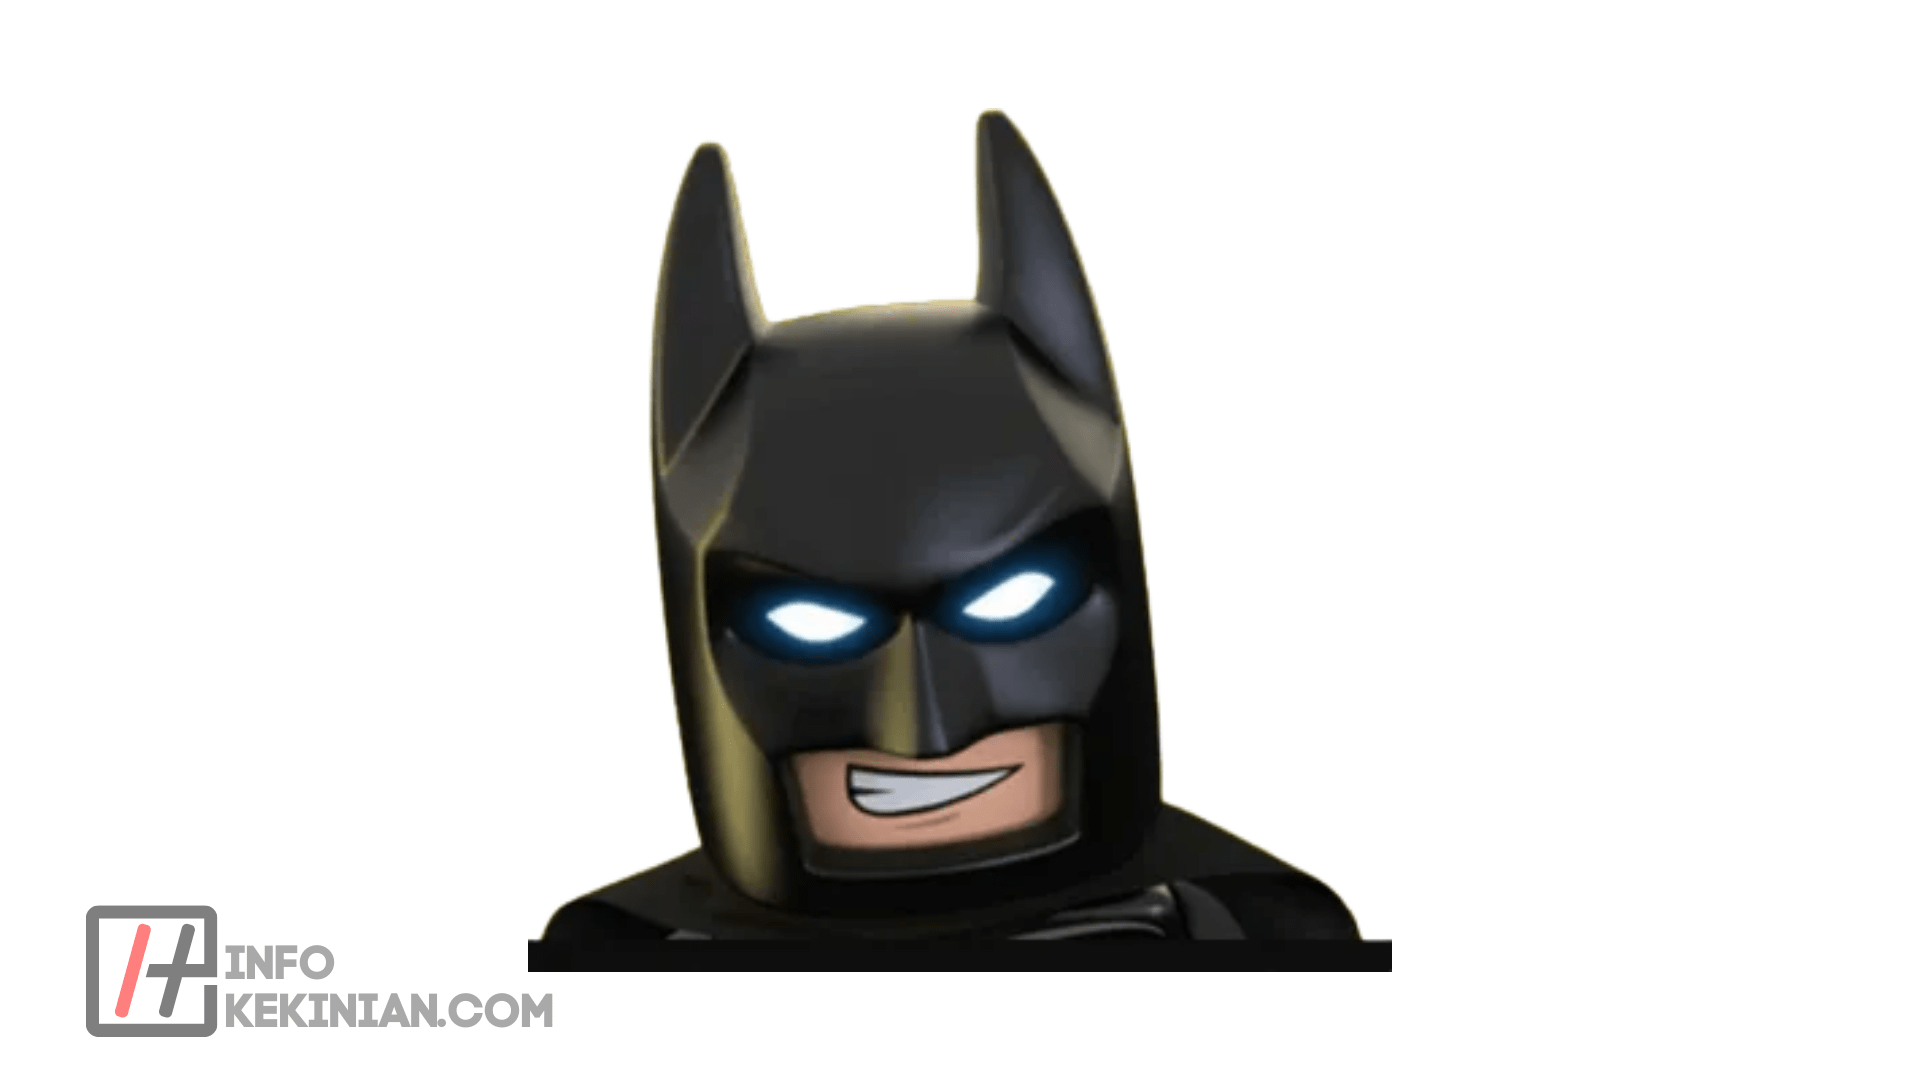 Cara Mendapatkan Filter Lego Batman di Instagram